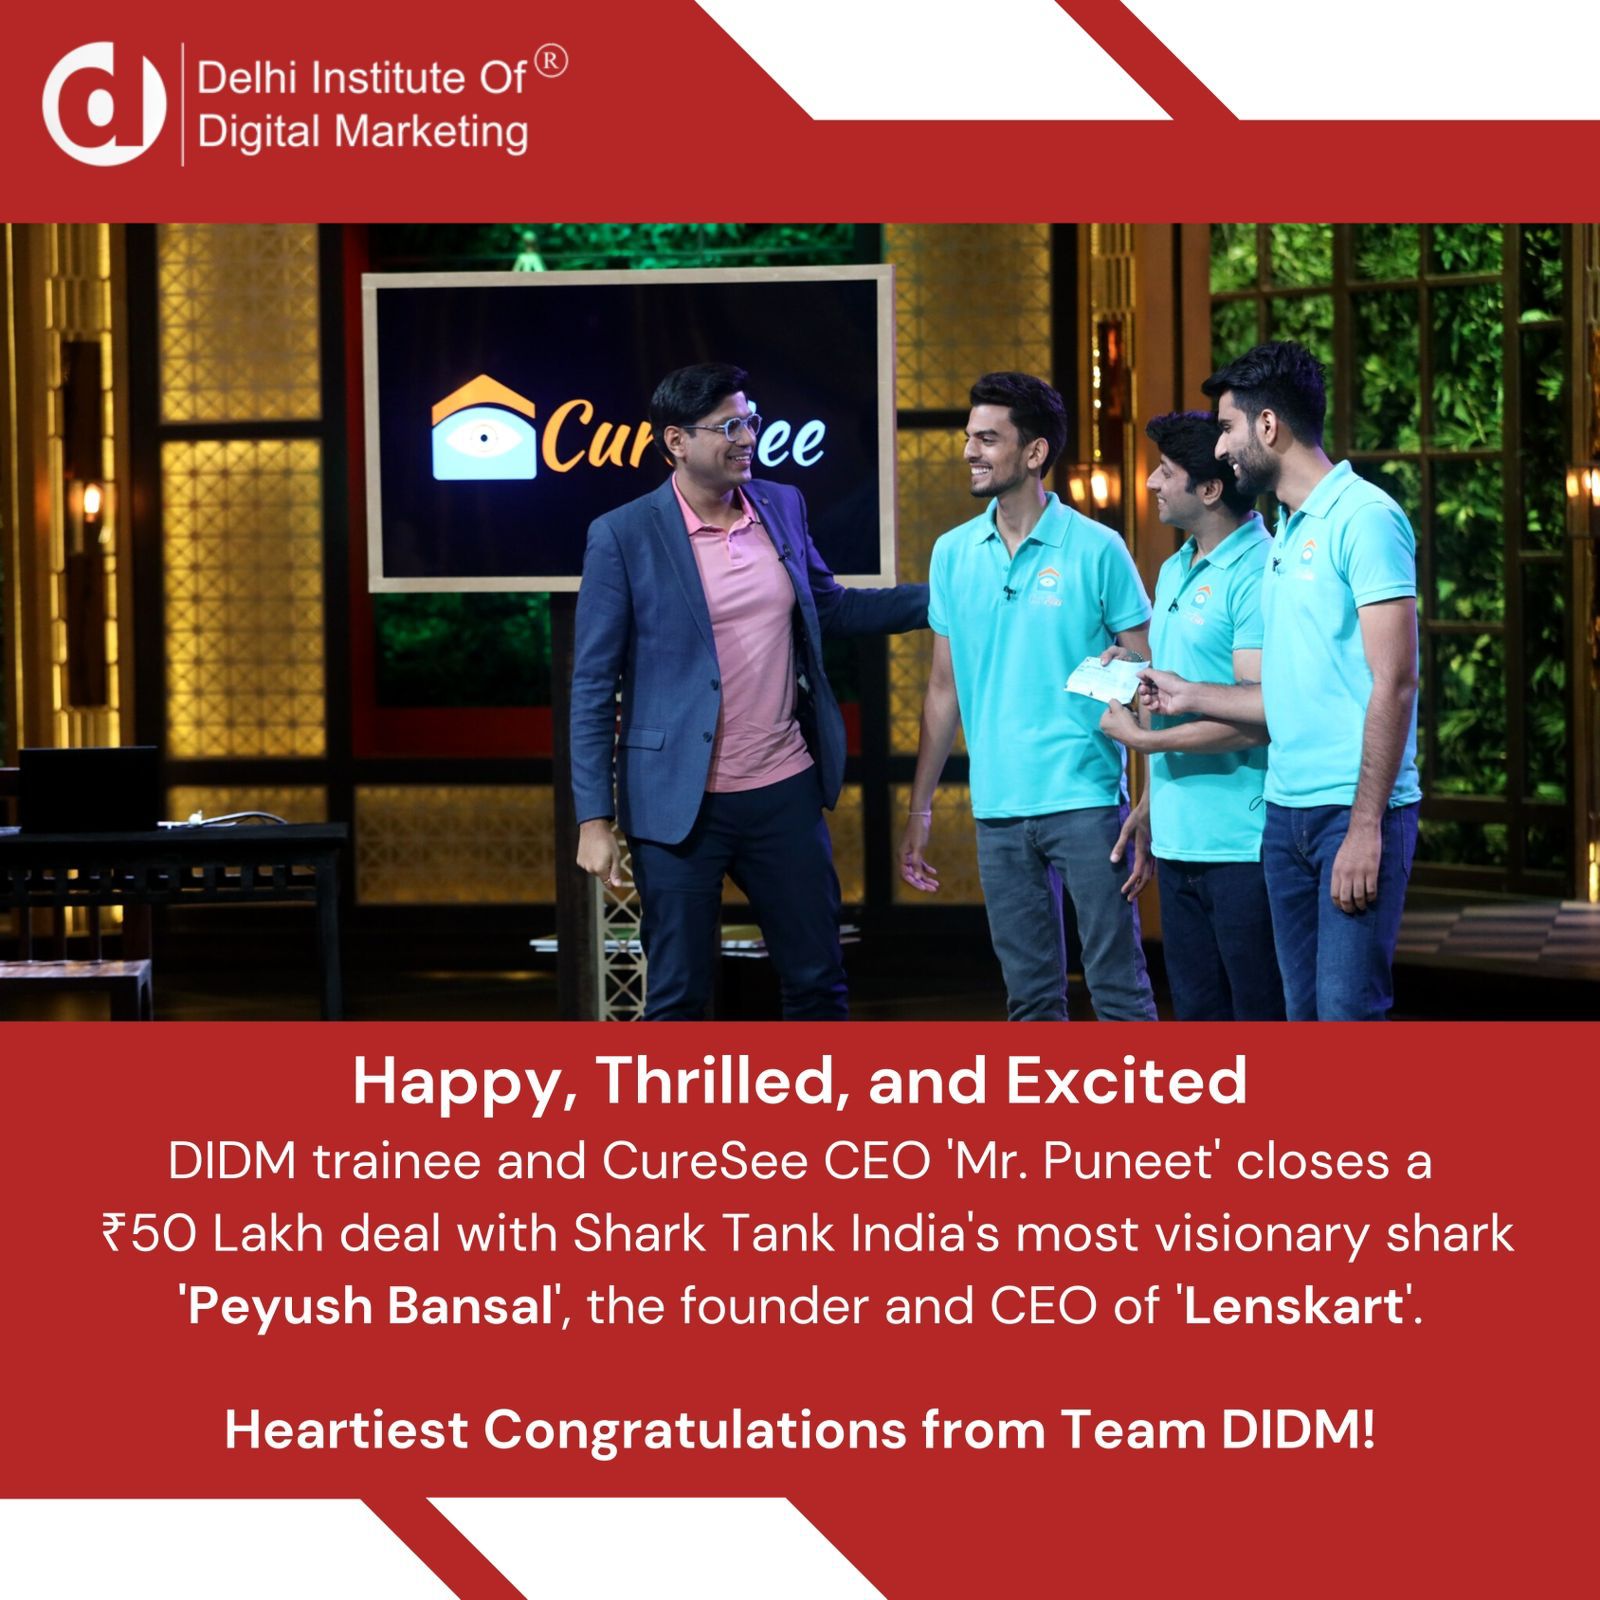 DIDM trainee closes a ₹50 Lakh deal with Shark Tank India’s most visionary shark 'Peyush Bansal